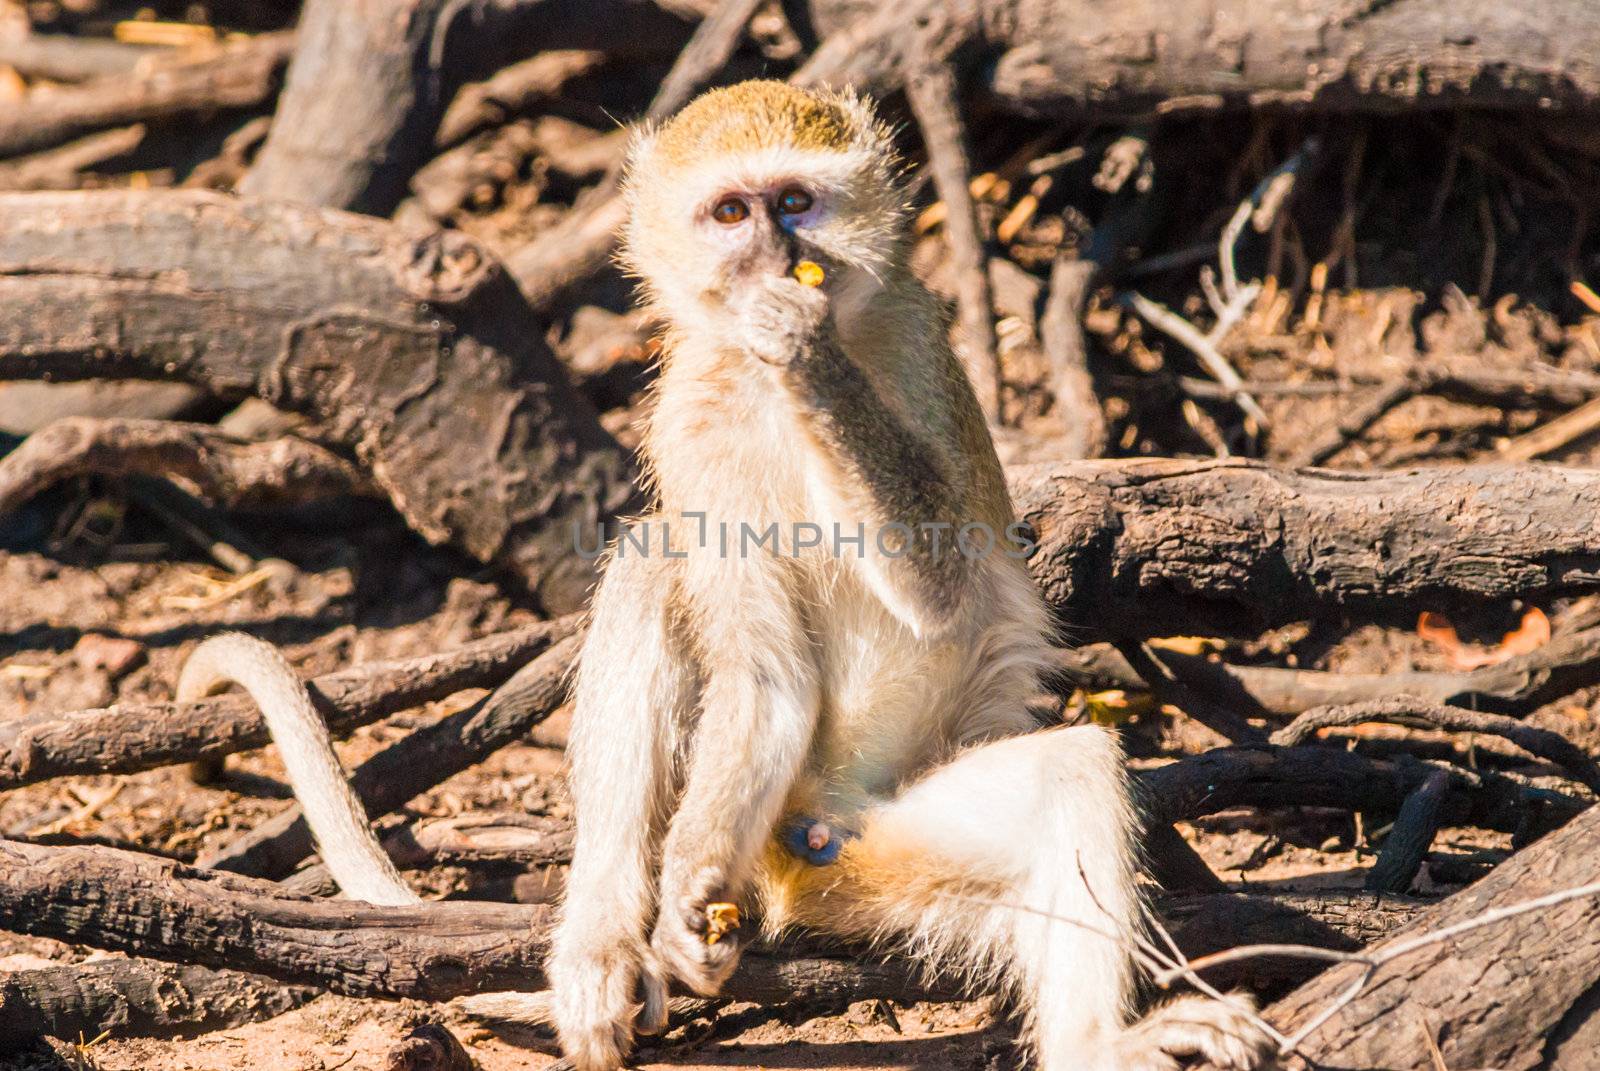 Vervet monkeys and branches, Chobe National Park